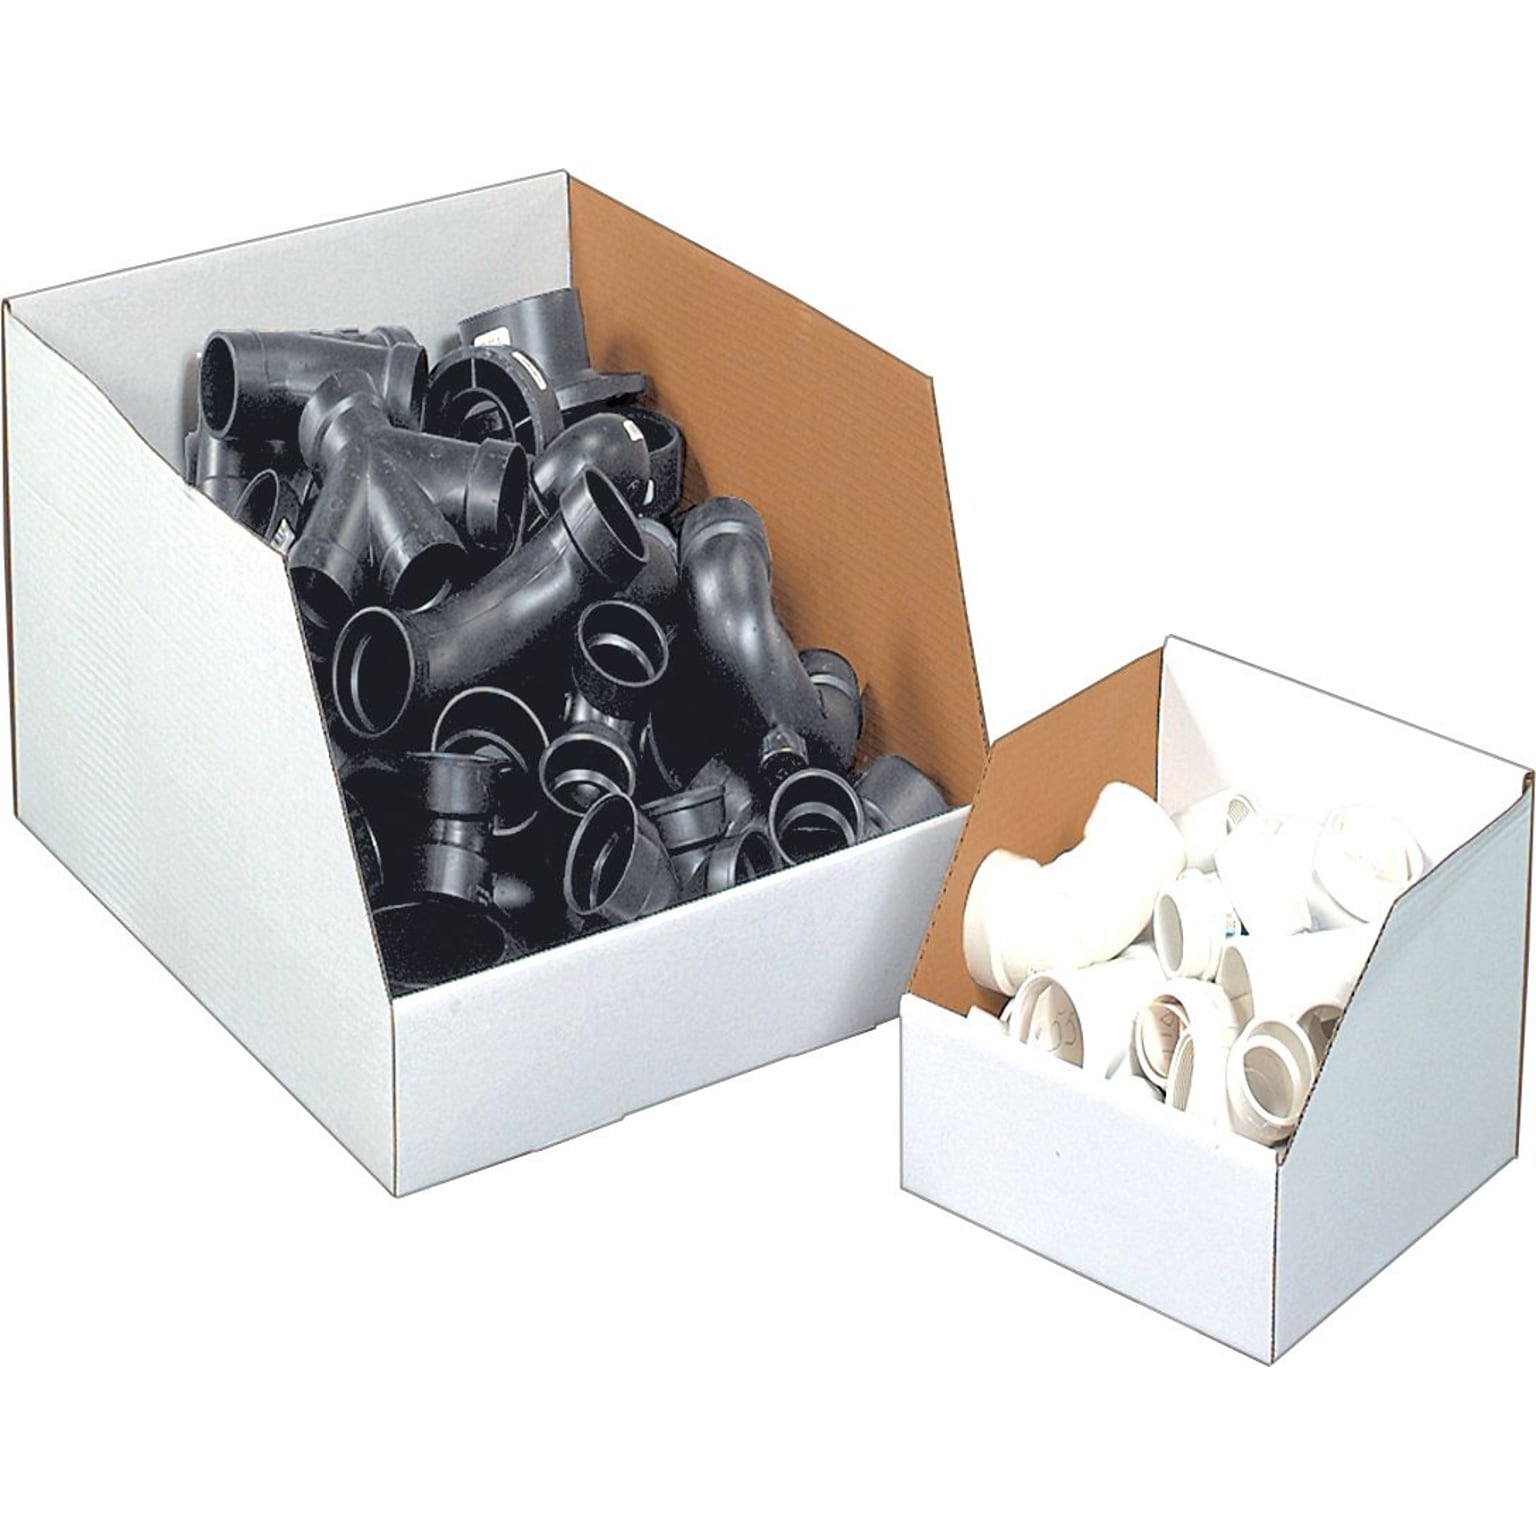 Staples® Jumbo Open Top Bin Boxes, 12 x 12 x 8, White, 25/Bundle